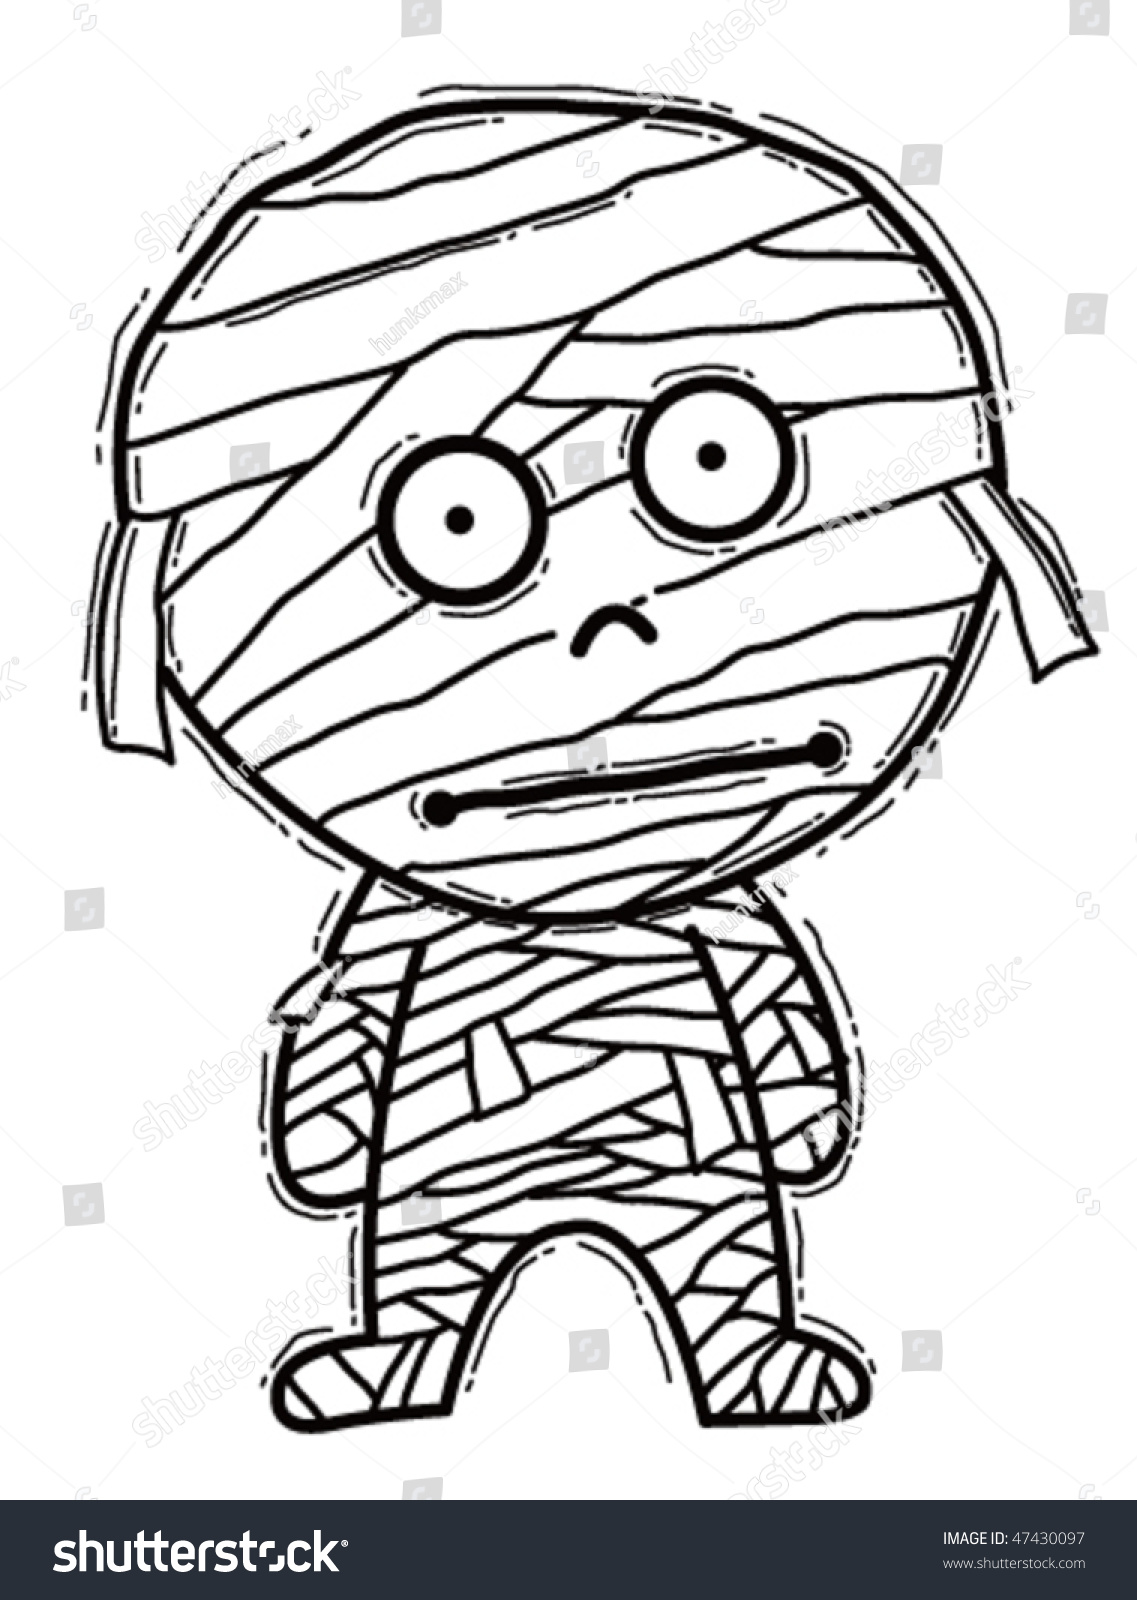 Mummy Cartoon Stock Vector 47430097 - Shutterstock